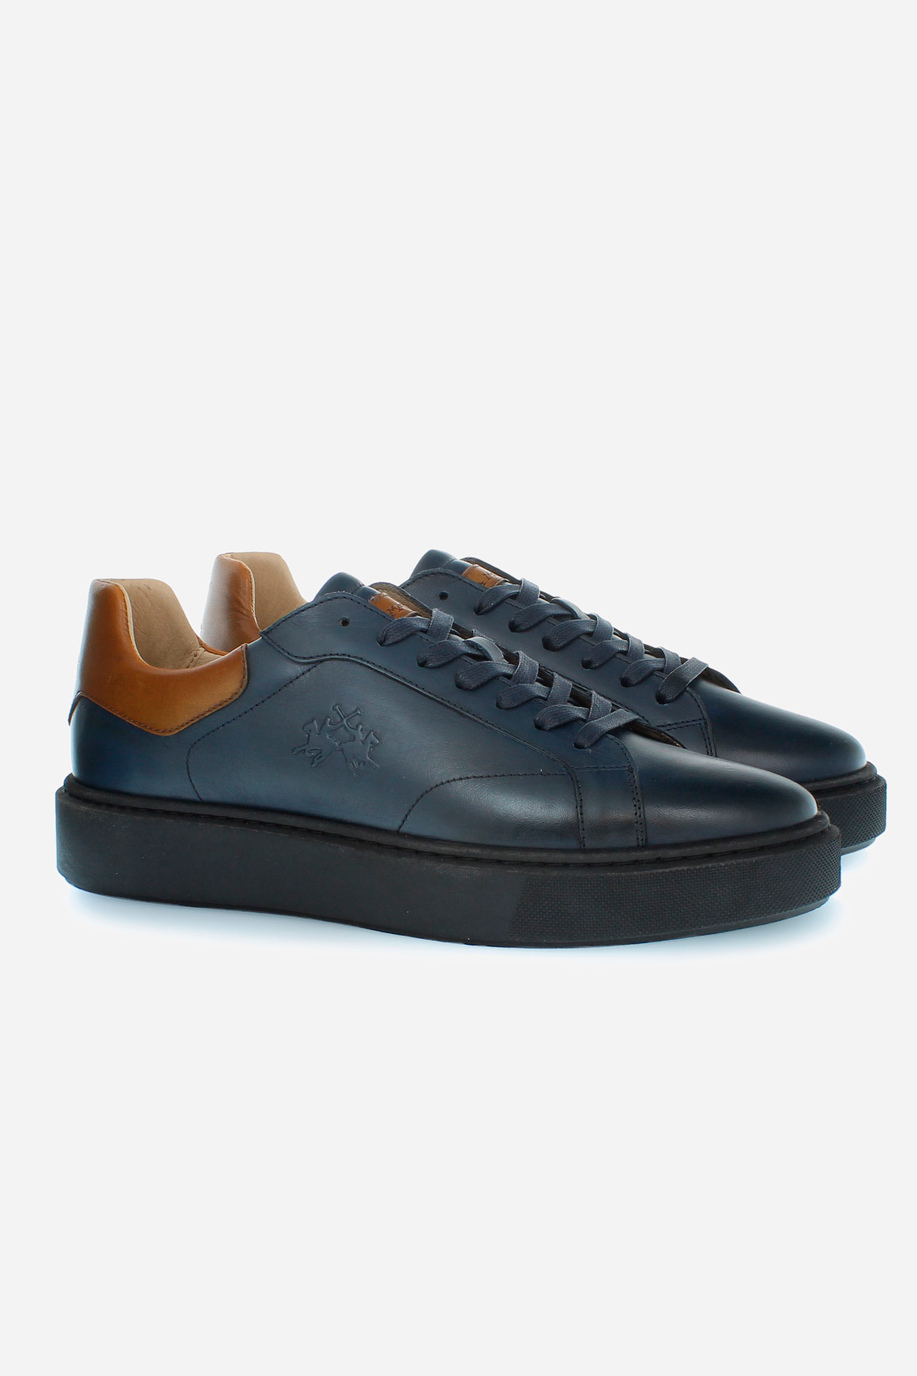 Herren Sneakers aus pflanzlichem Kalbsleder - Schuhe | La Martina - Official Online Shop